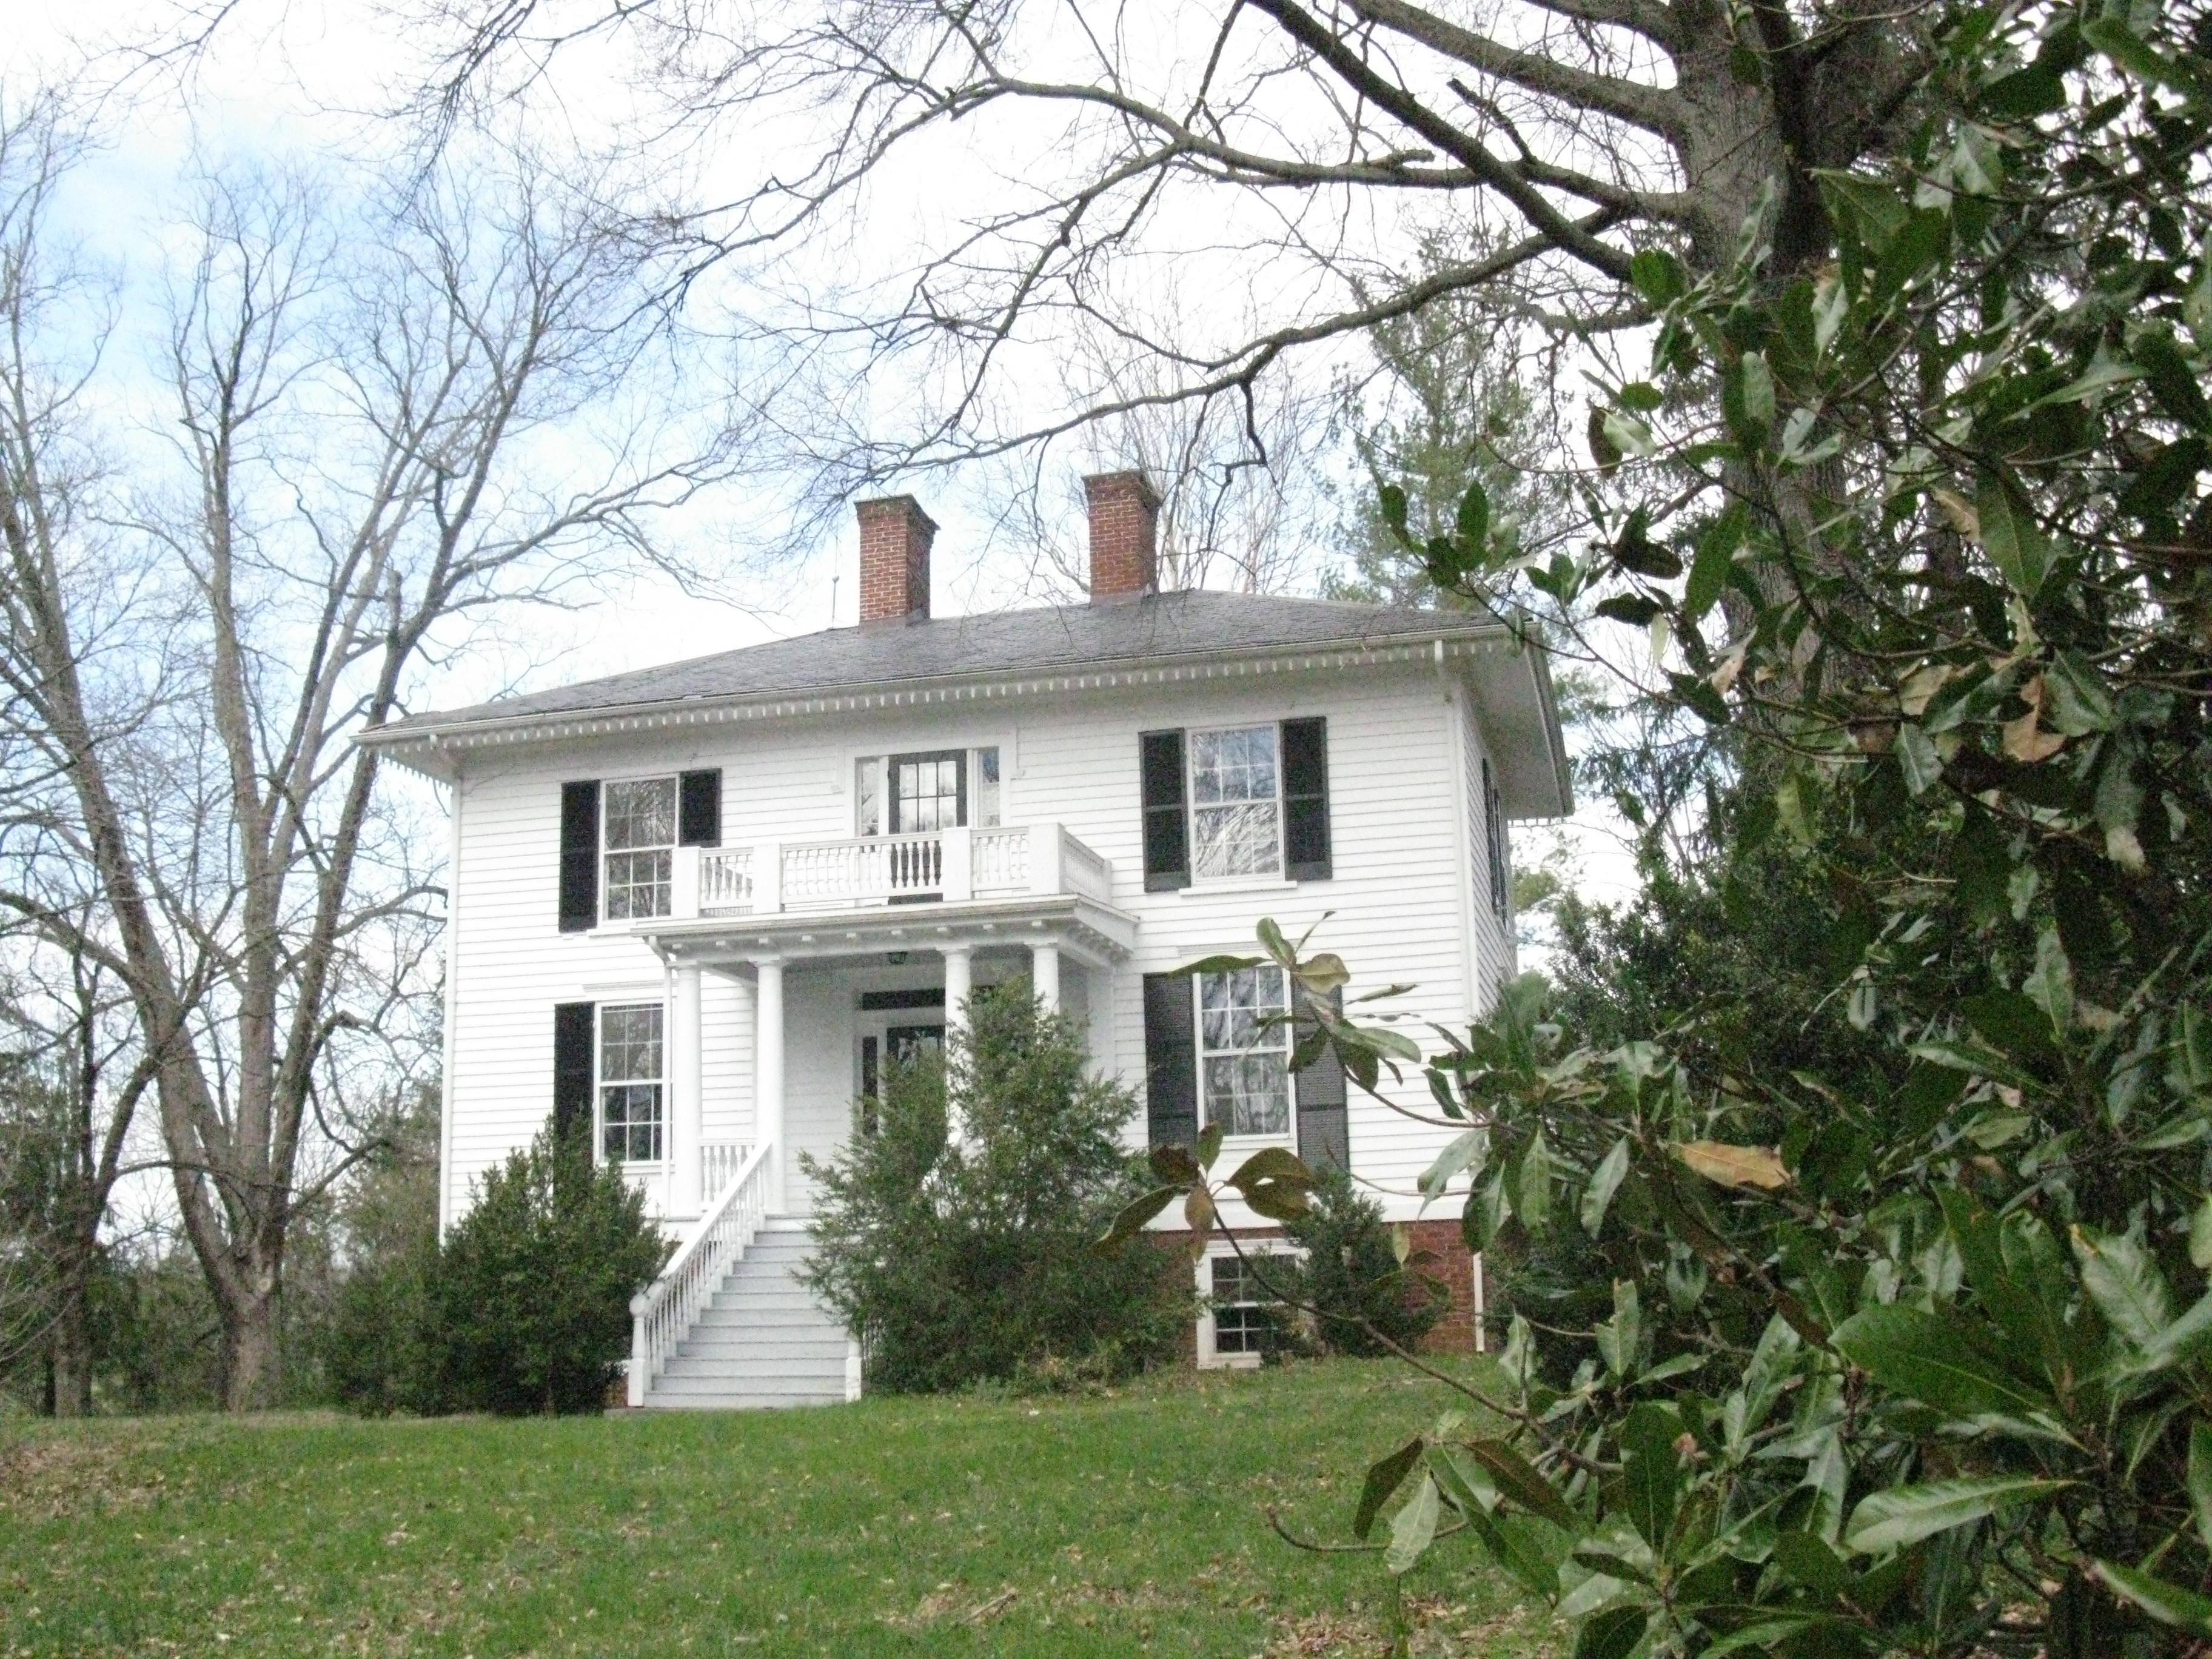 White historic house